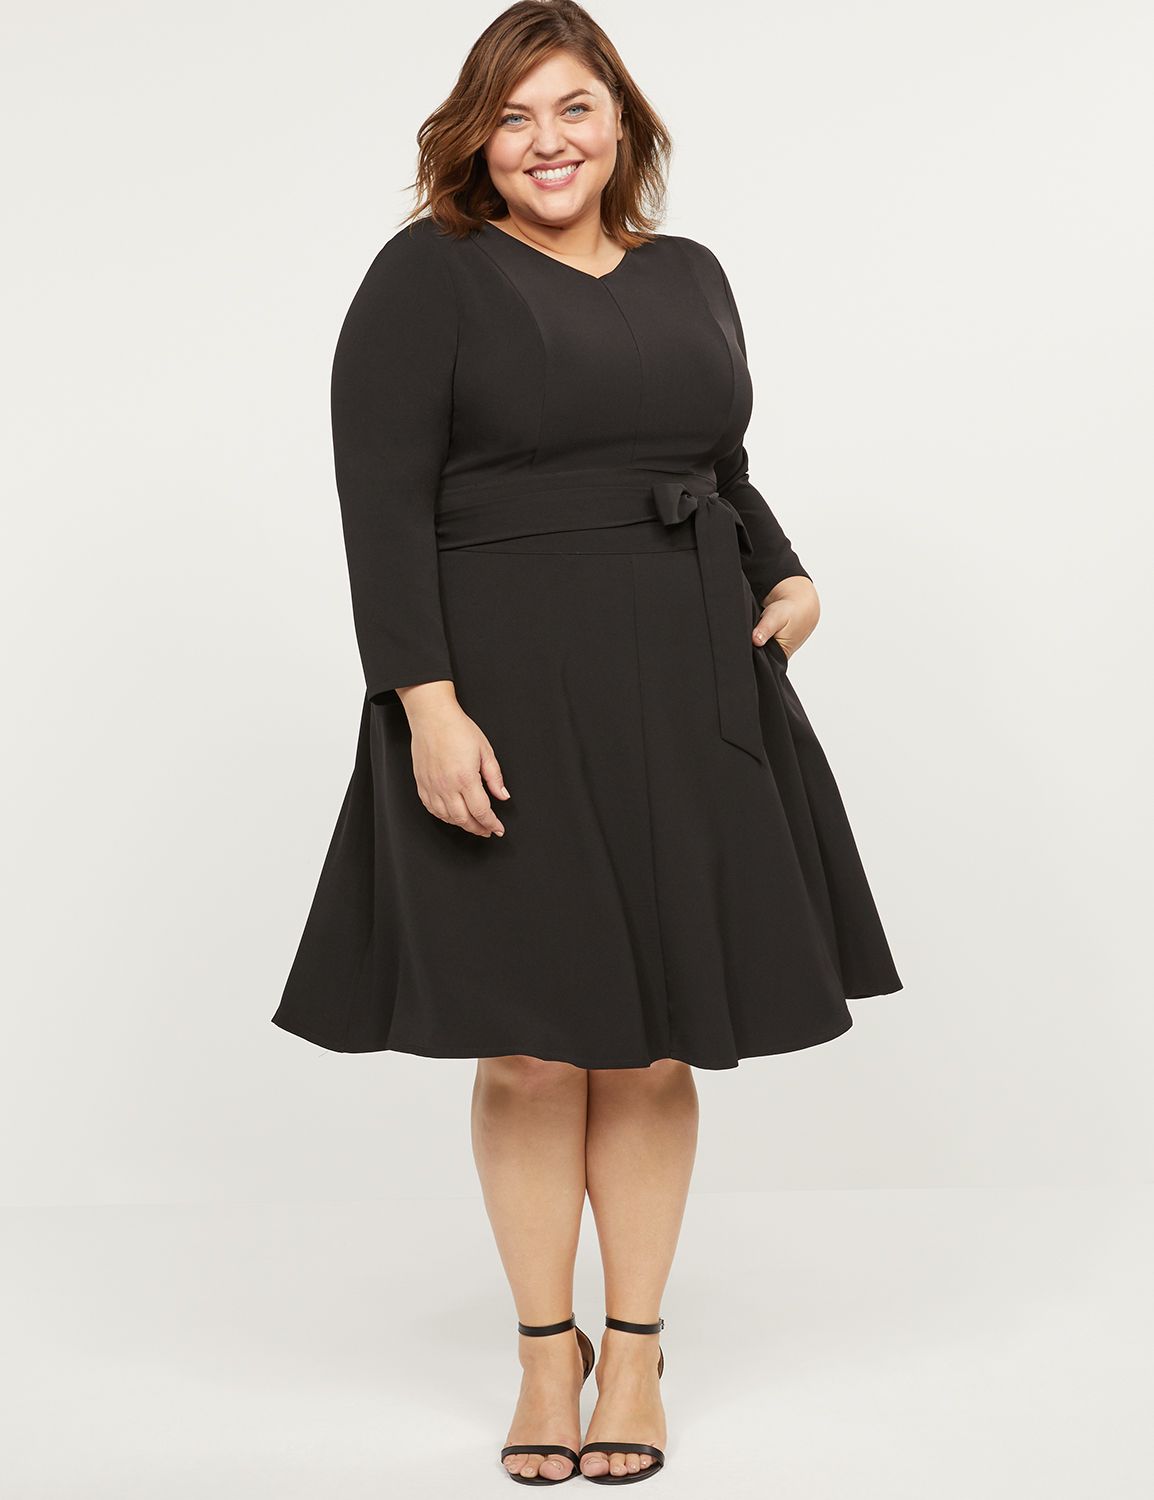 black dress large size